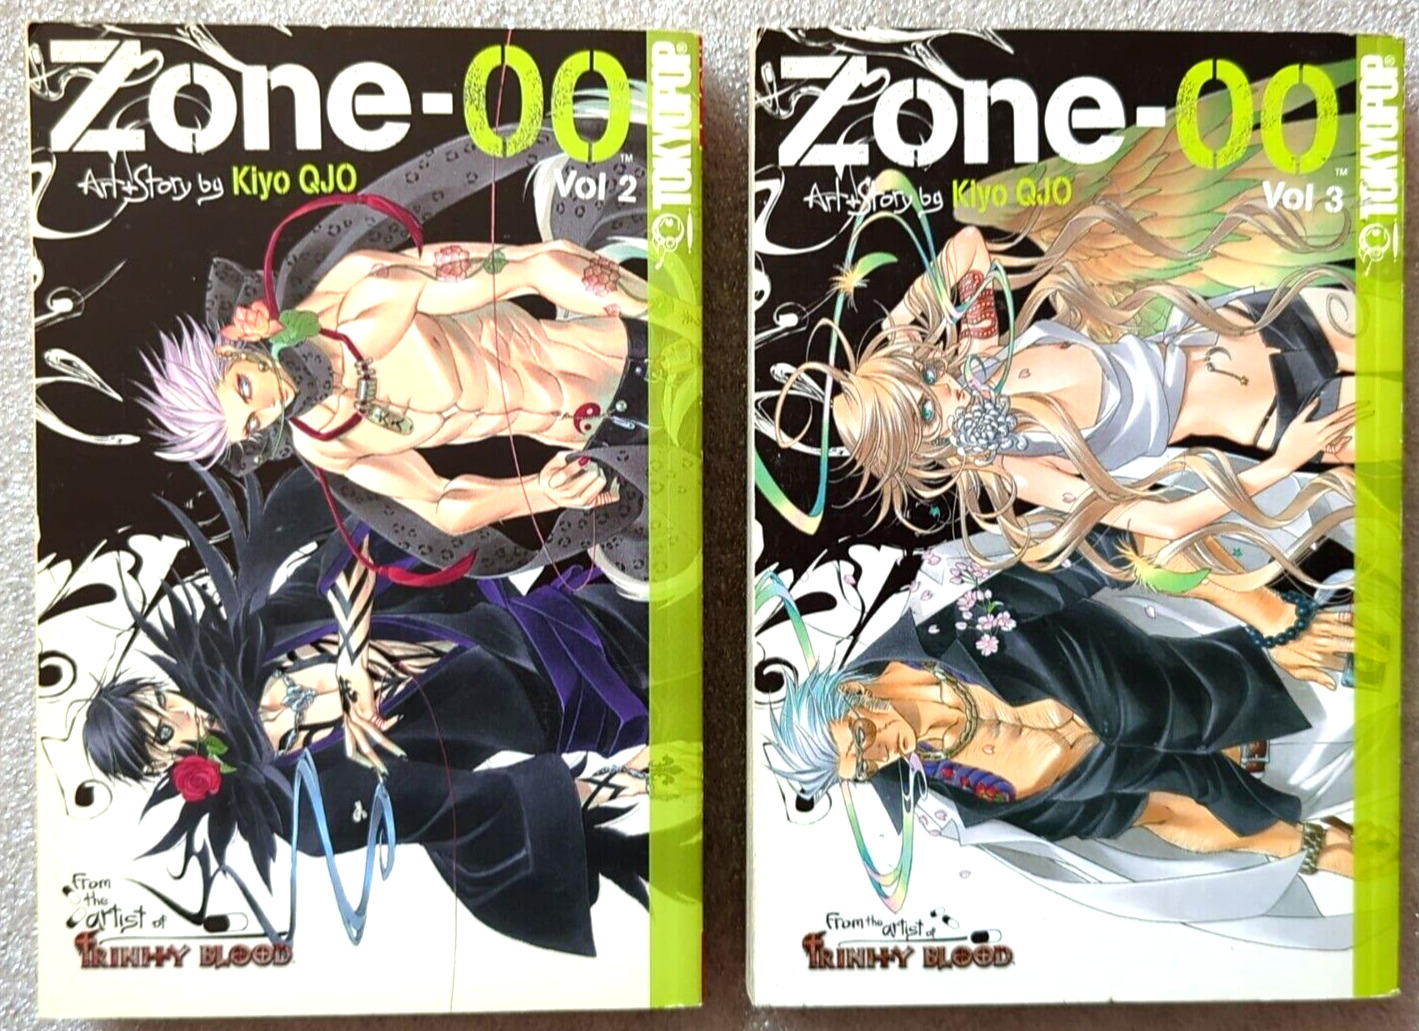 Zone-00 Vol 2-3 Manga Lot, 1st Print 2009, Miyo QJO (Artist Of Trinity Blood)